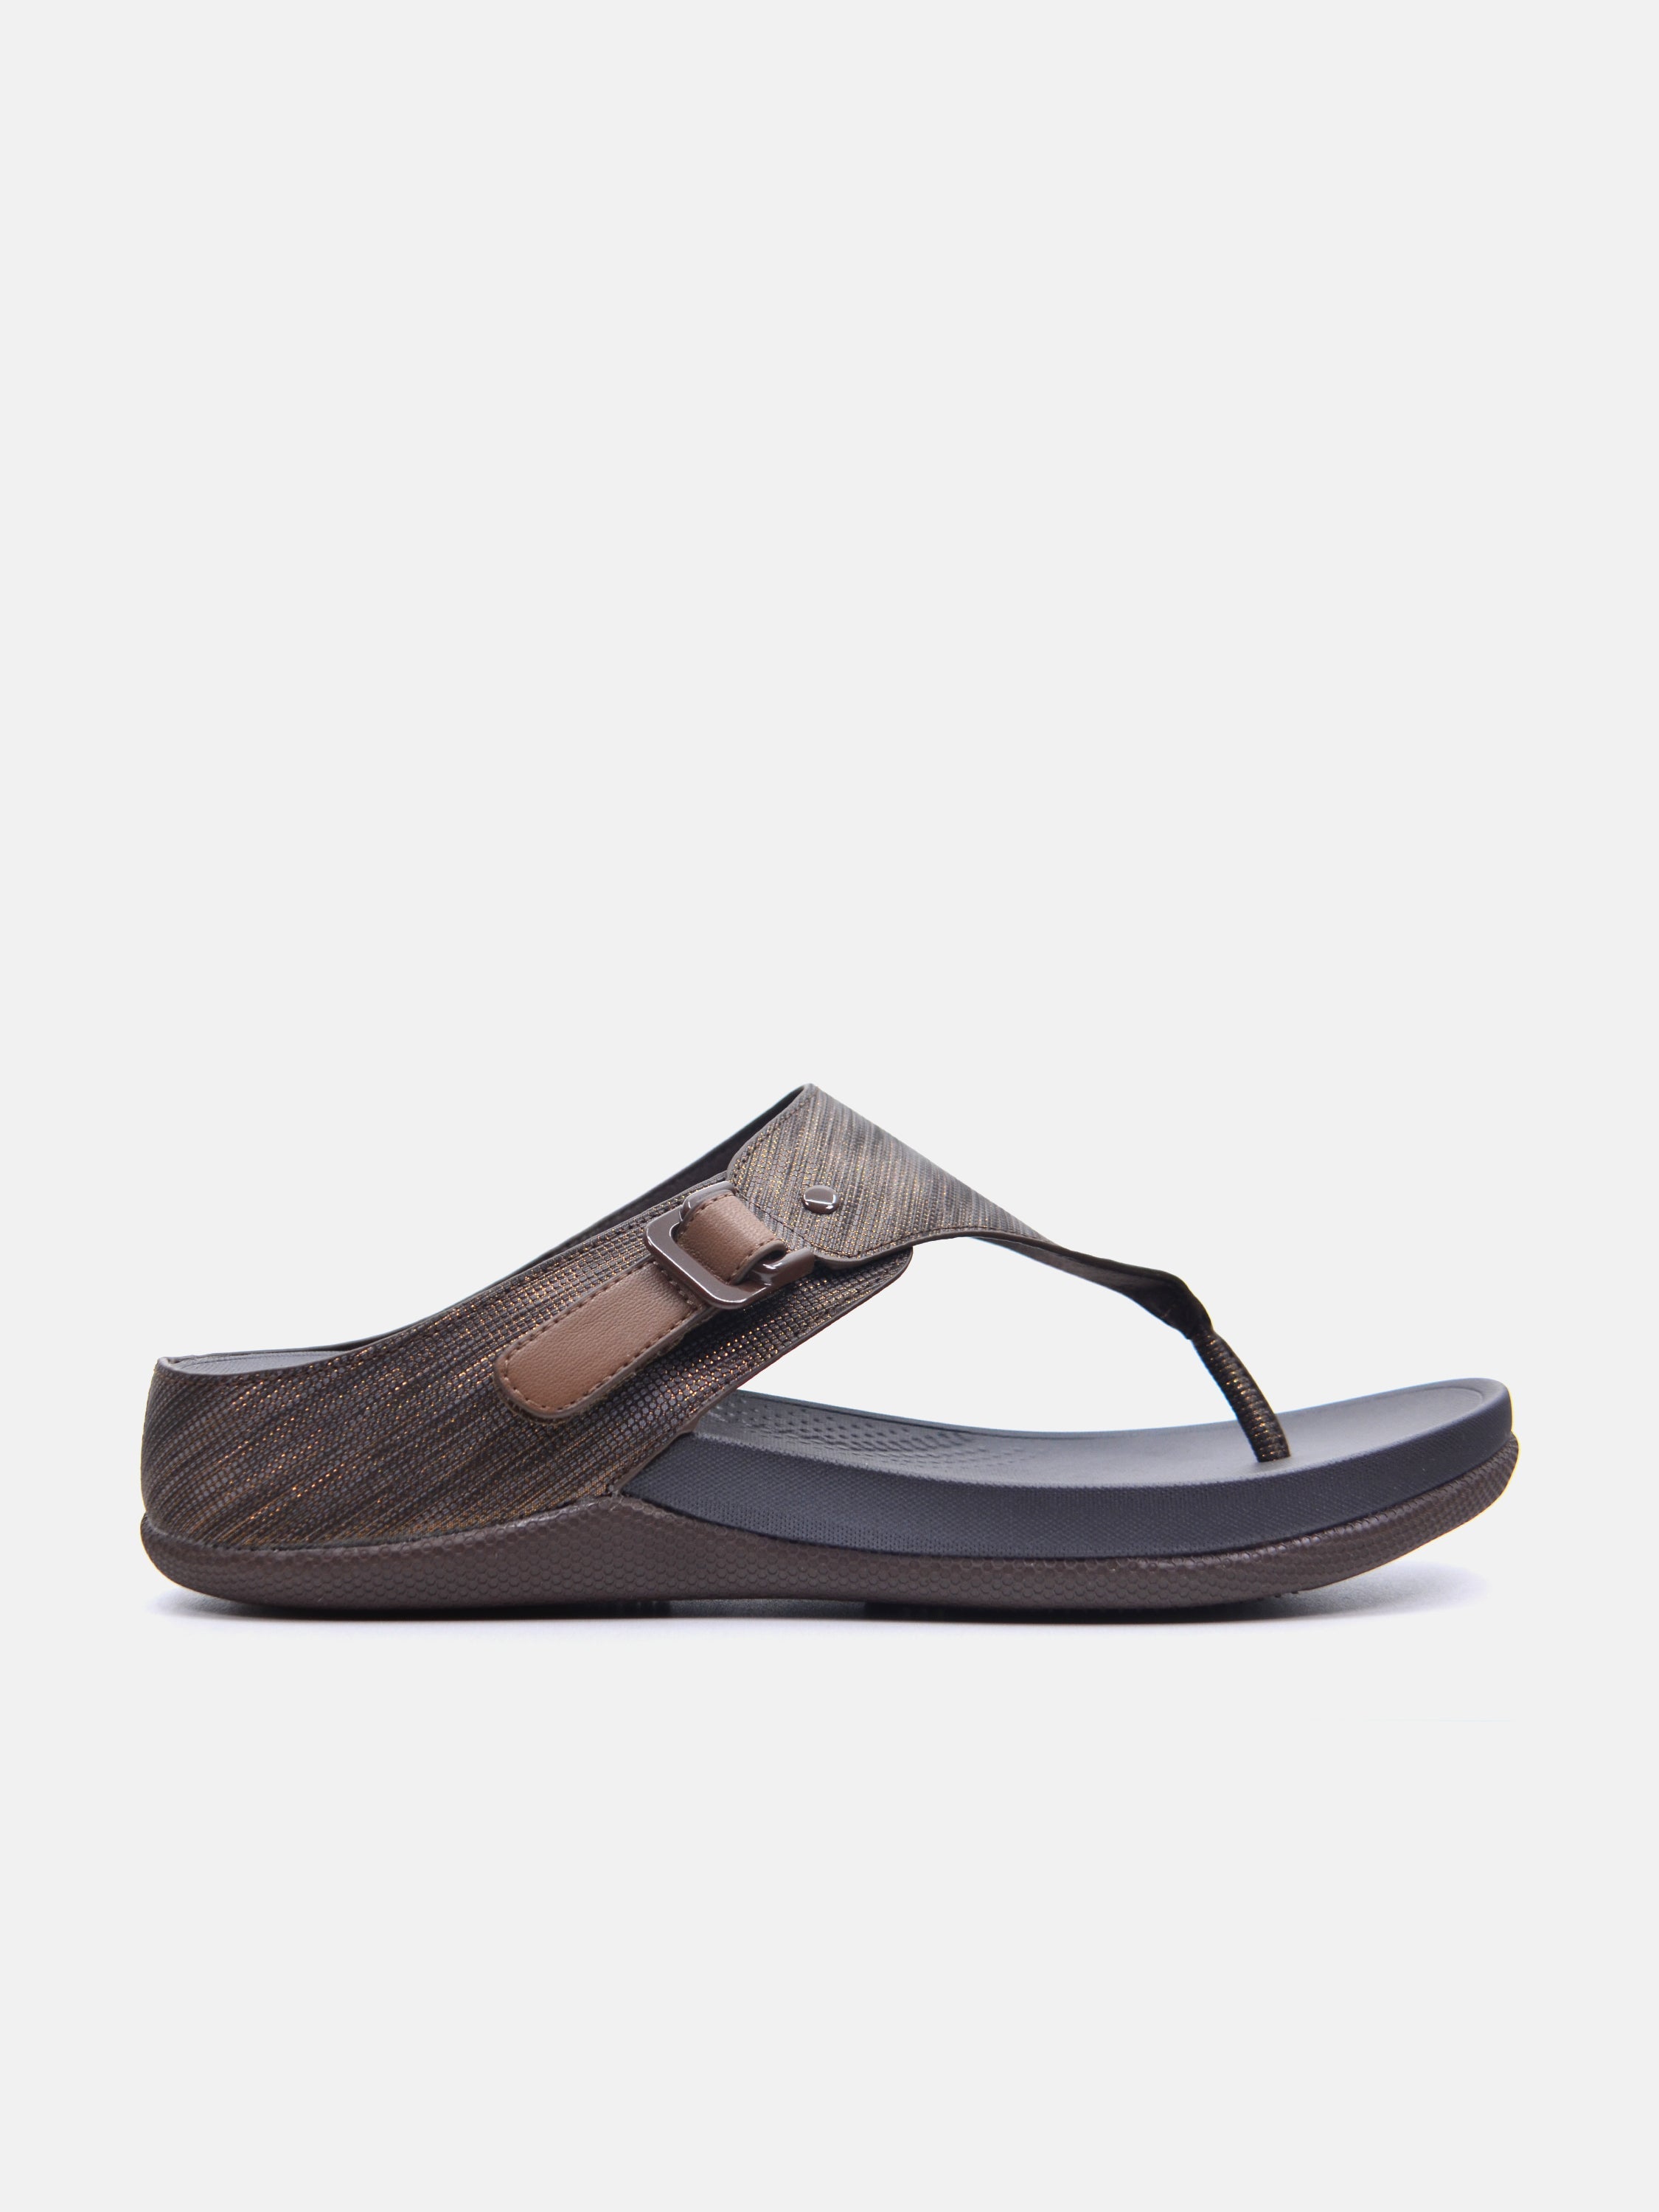 Michelle Morgan 814XY66A Women's Flat Sandals #color_Brown